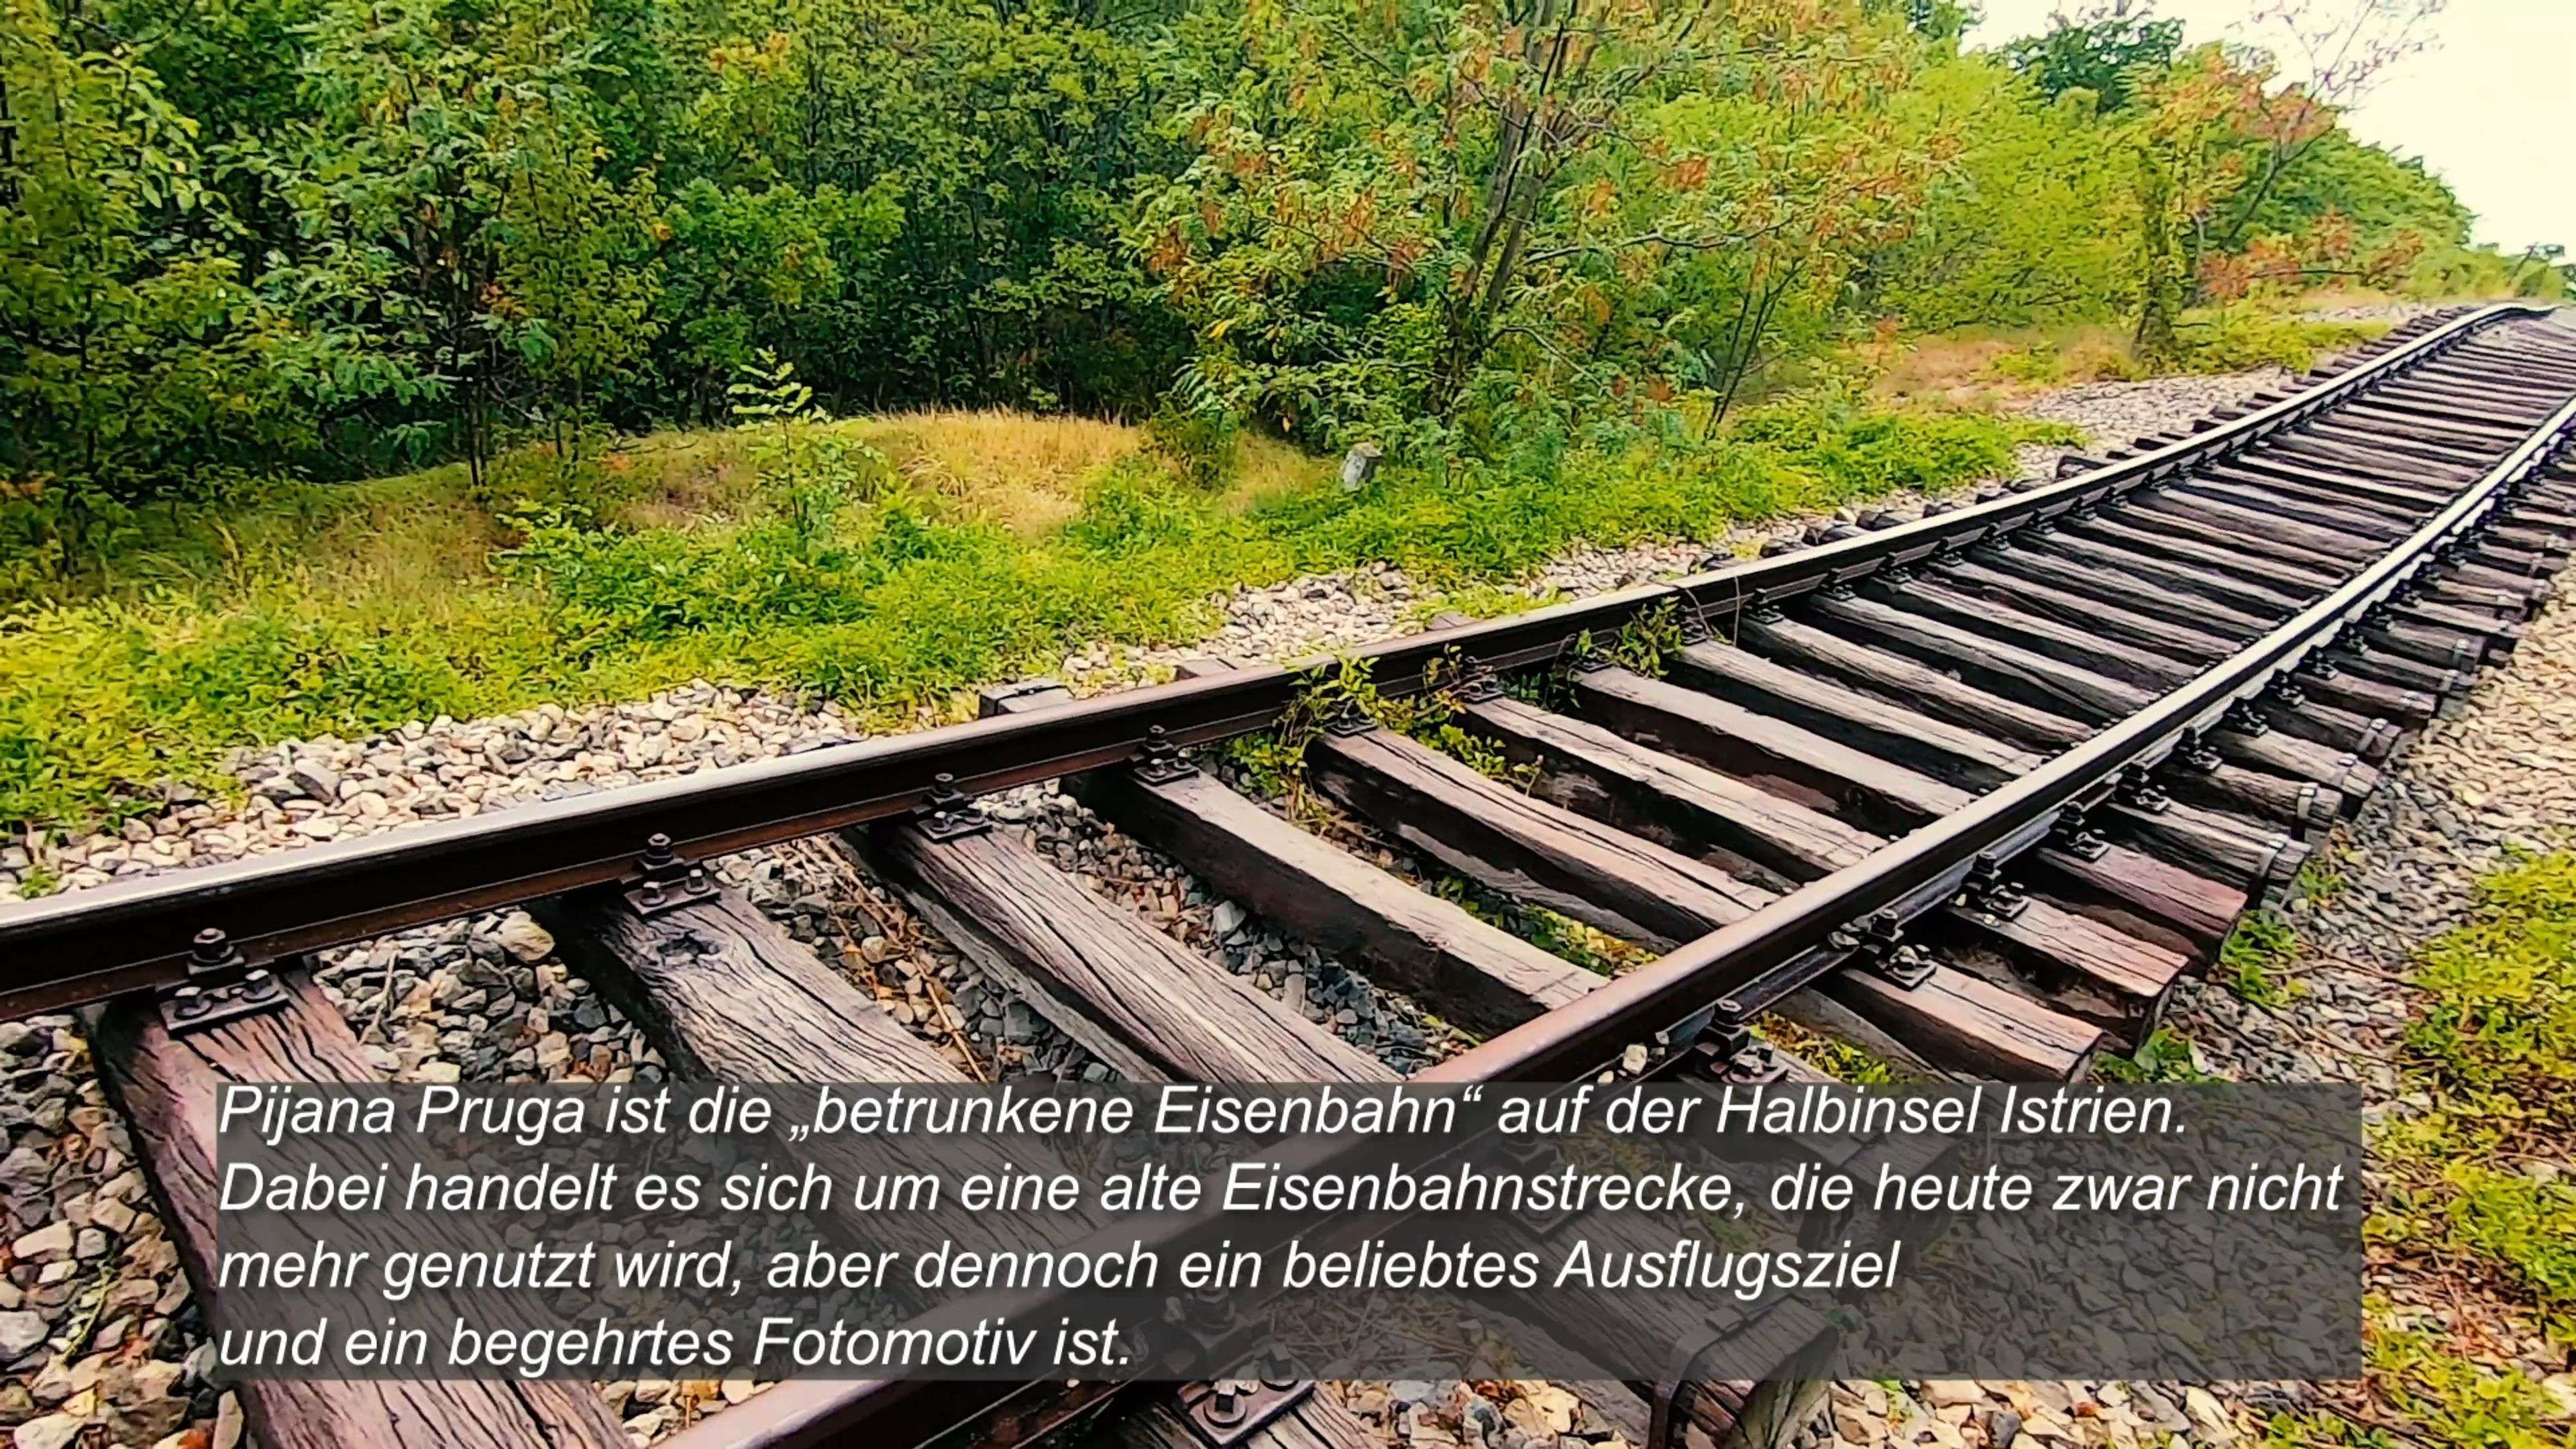 Lost Place - Railway Pijana Prug